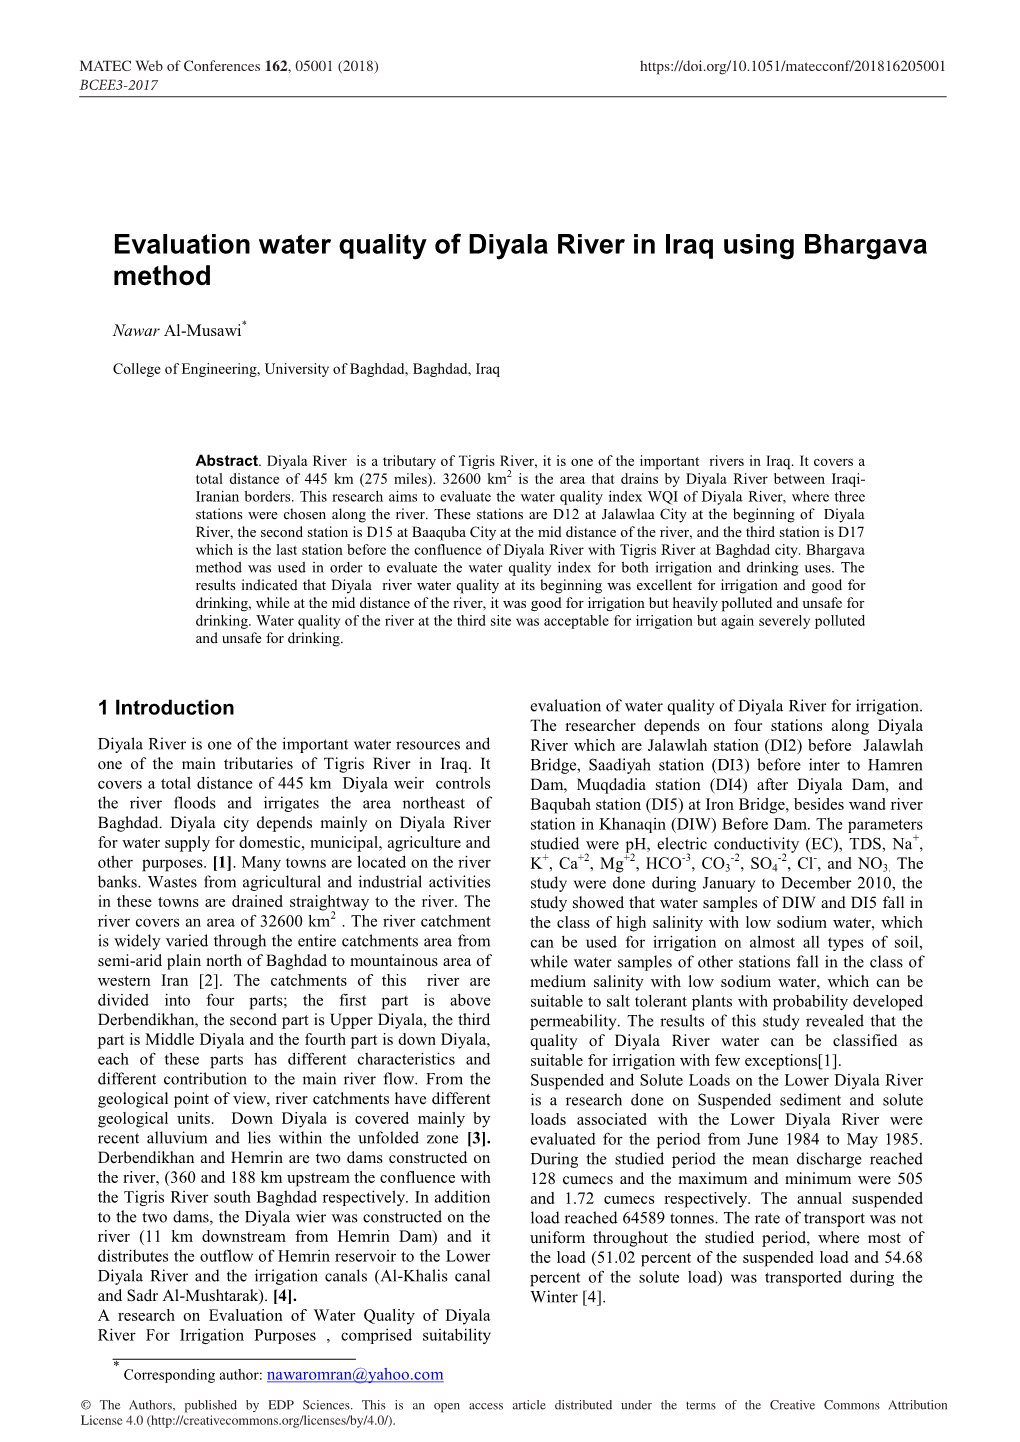 Evaluation Water Quality of Diyala River in Iraq Using Bhargava Method